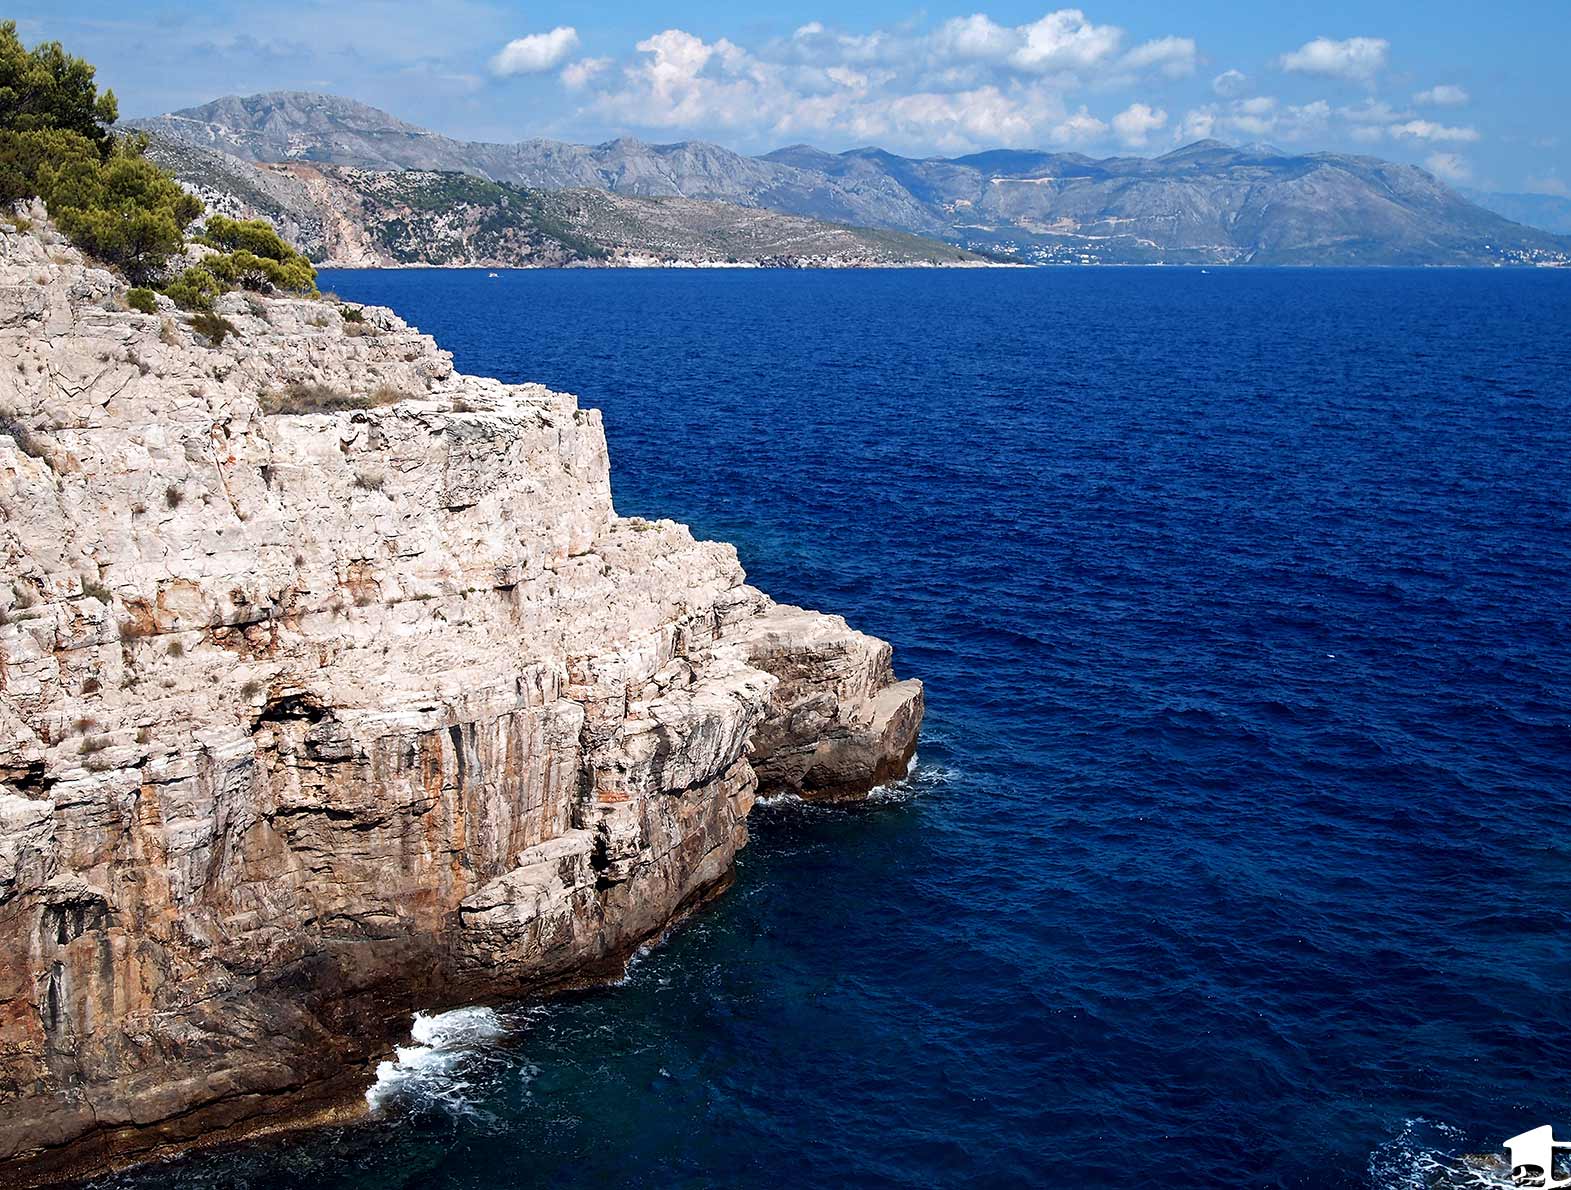 Adriatic Sea off Lokrum Island, Croatia